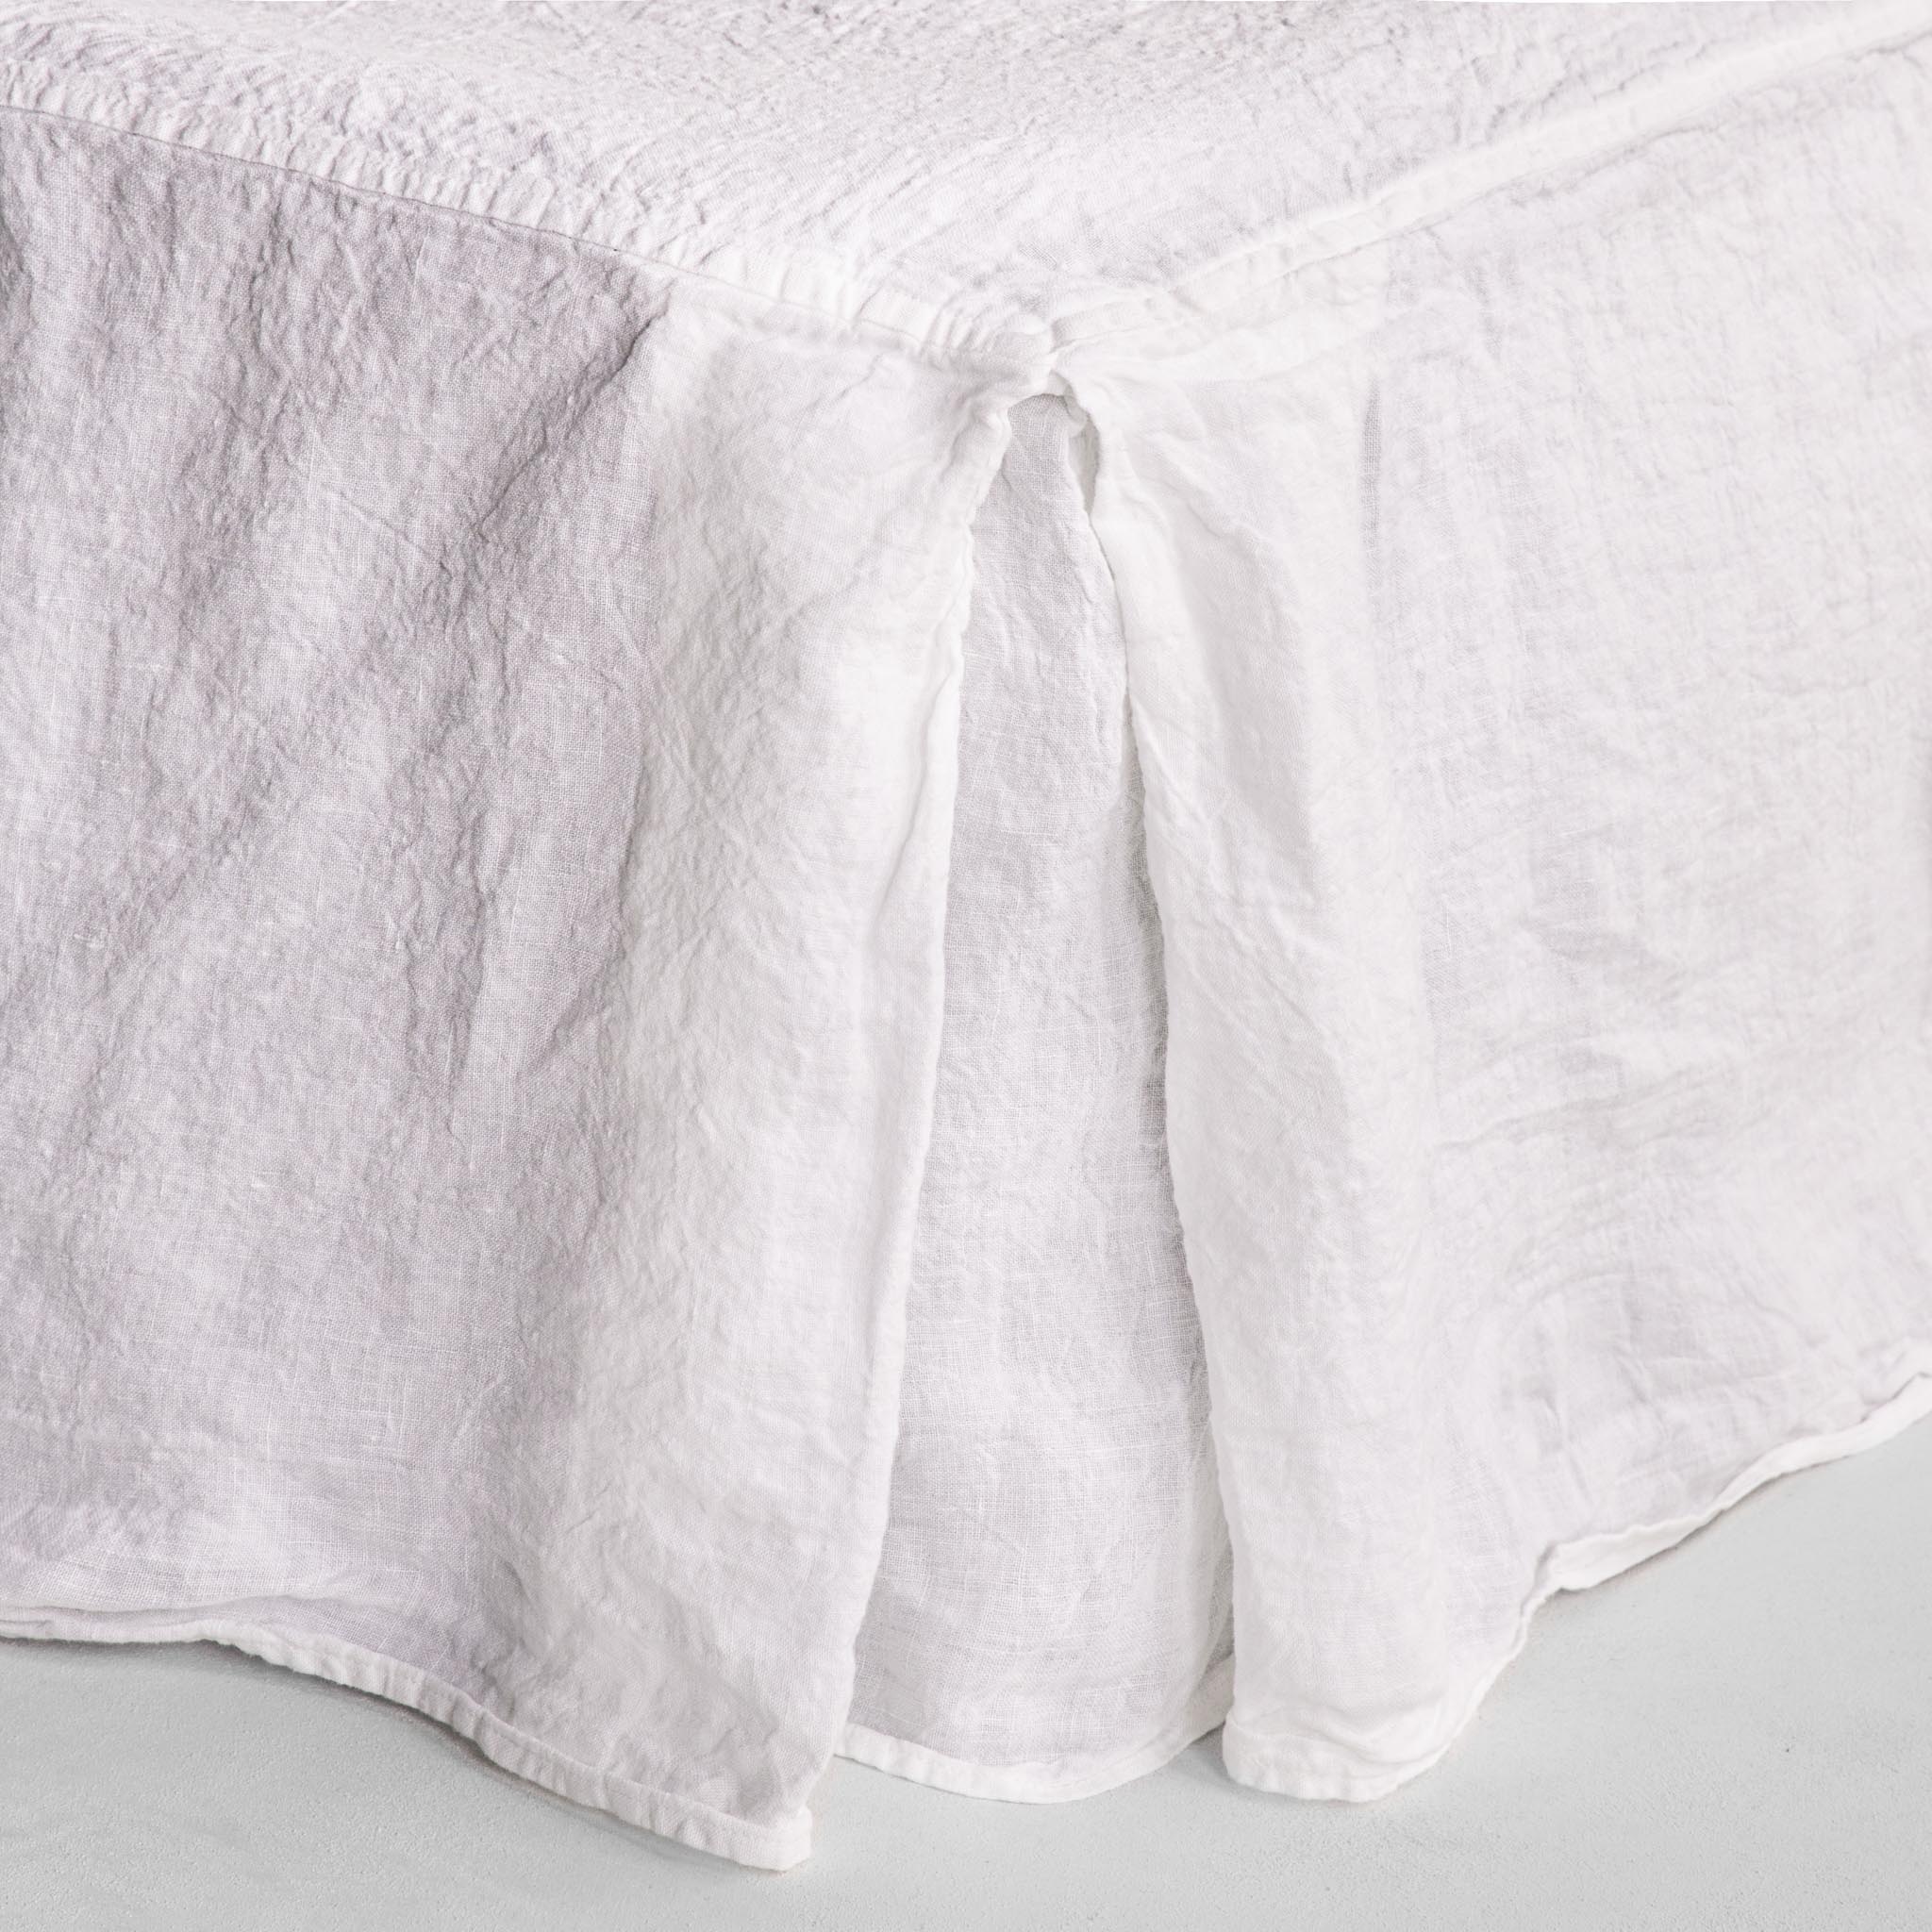 Luxury Linen Bed Skirt | Antique White | Hale Mercantile Co.